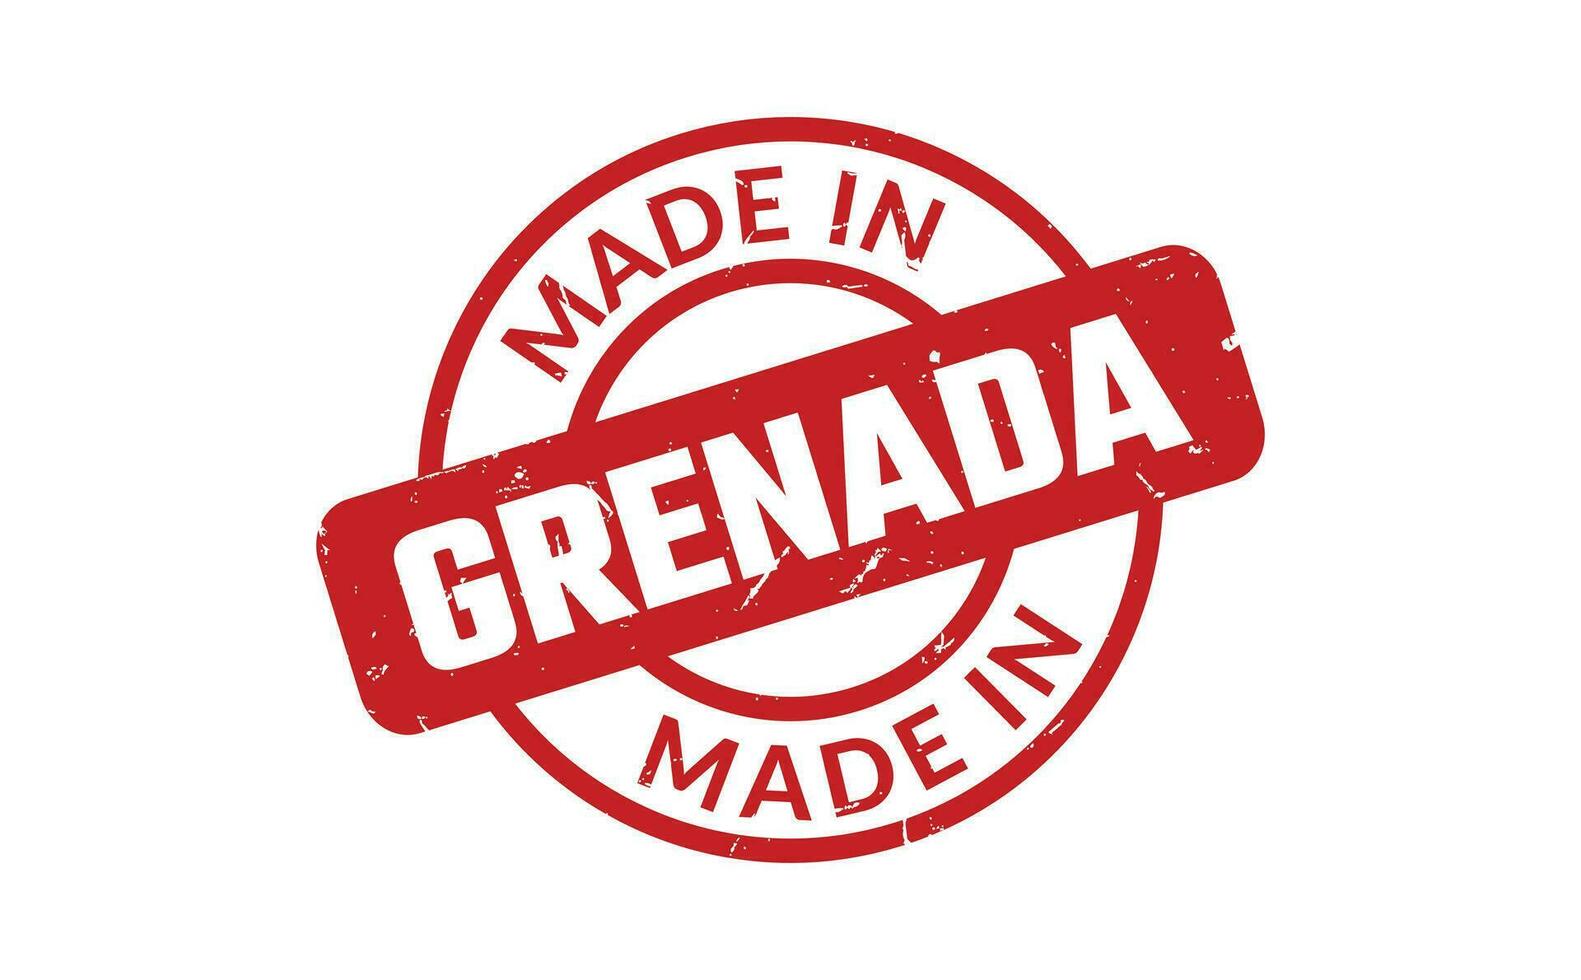 Made In Grenada Rubber Stamp vector